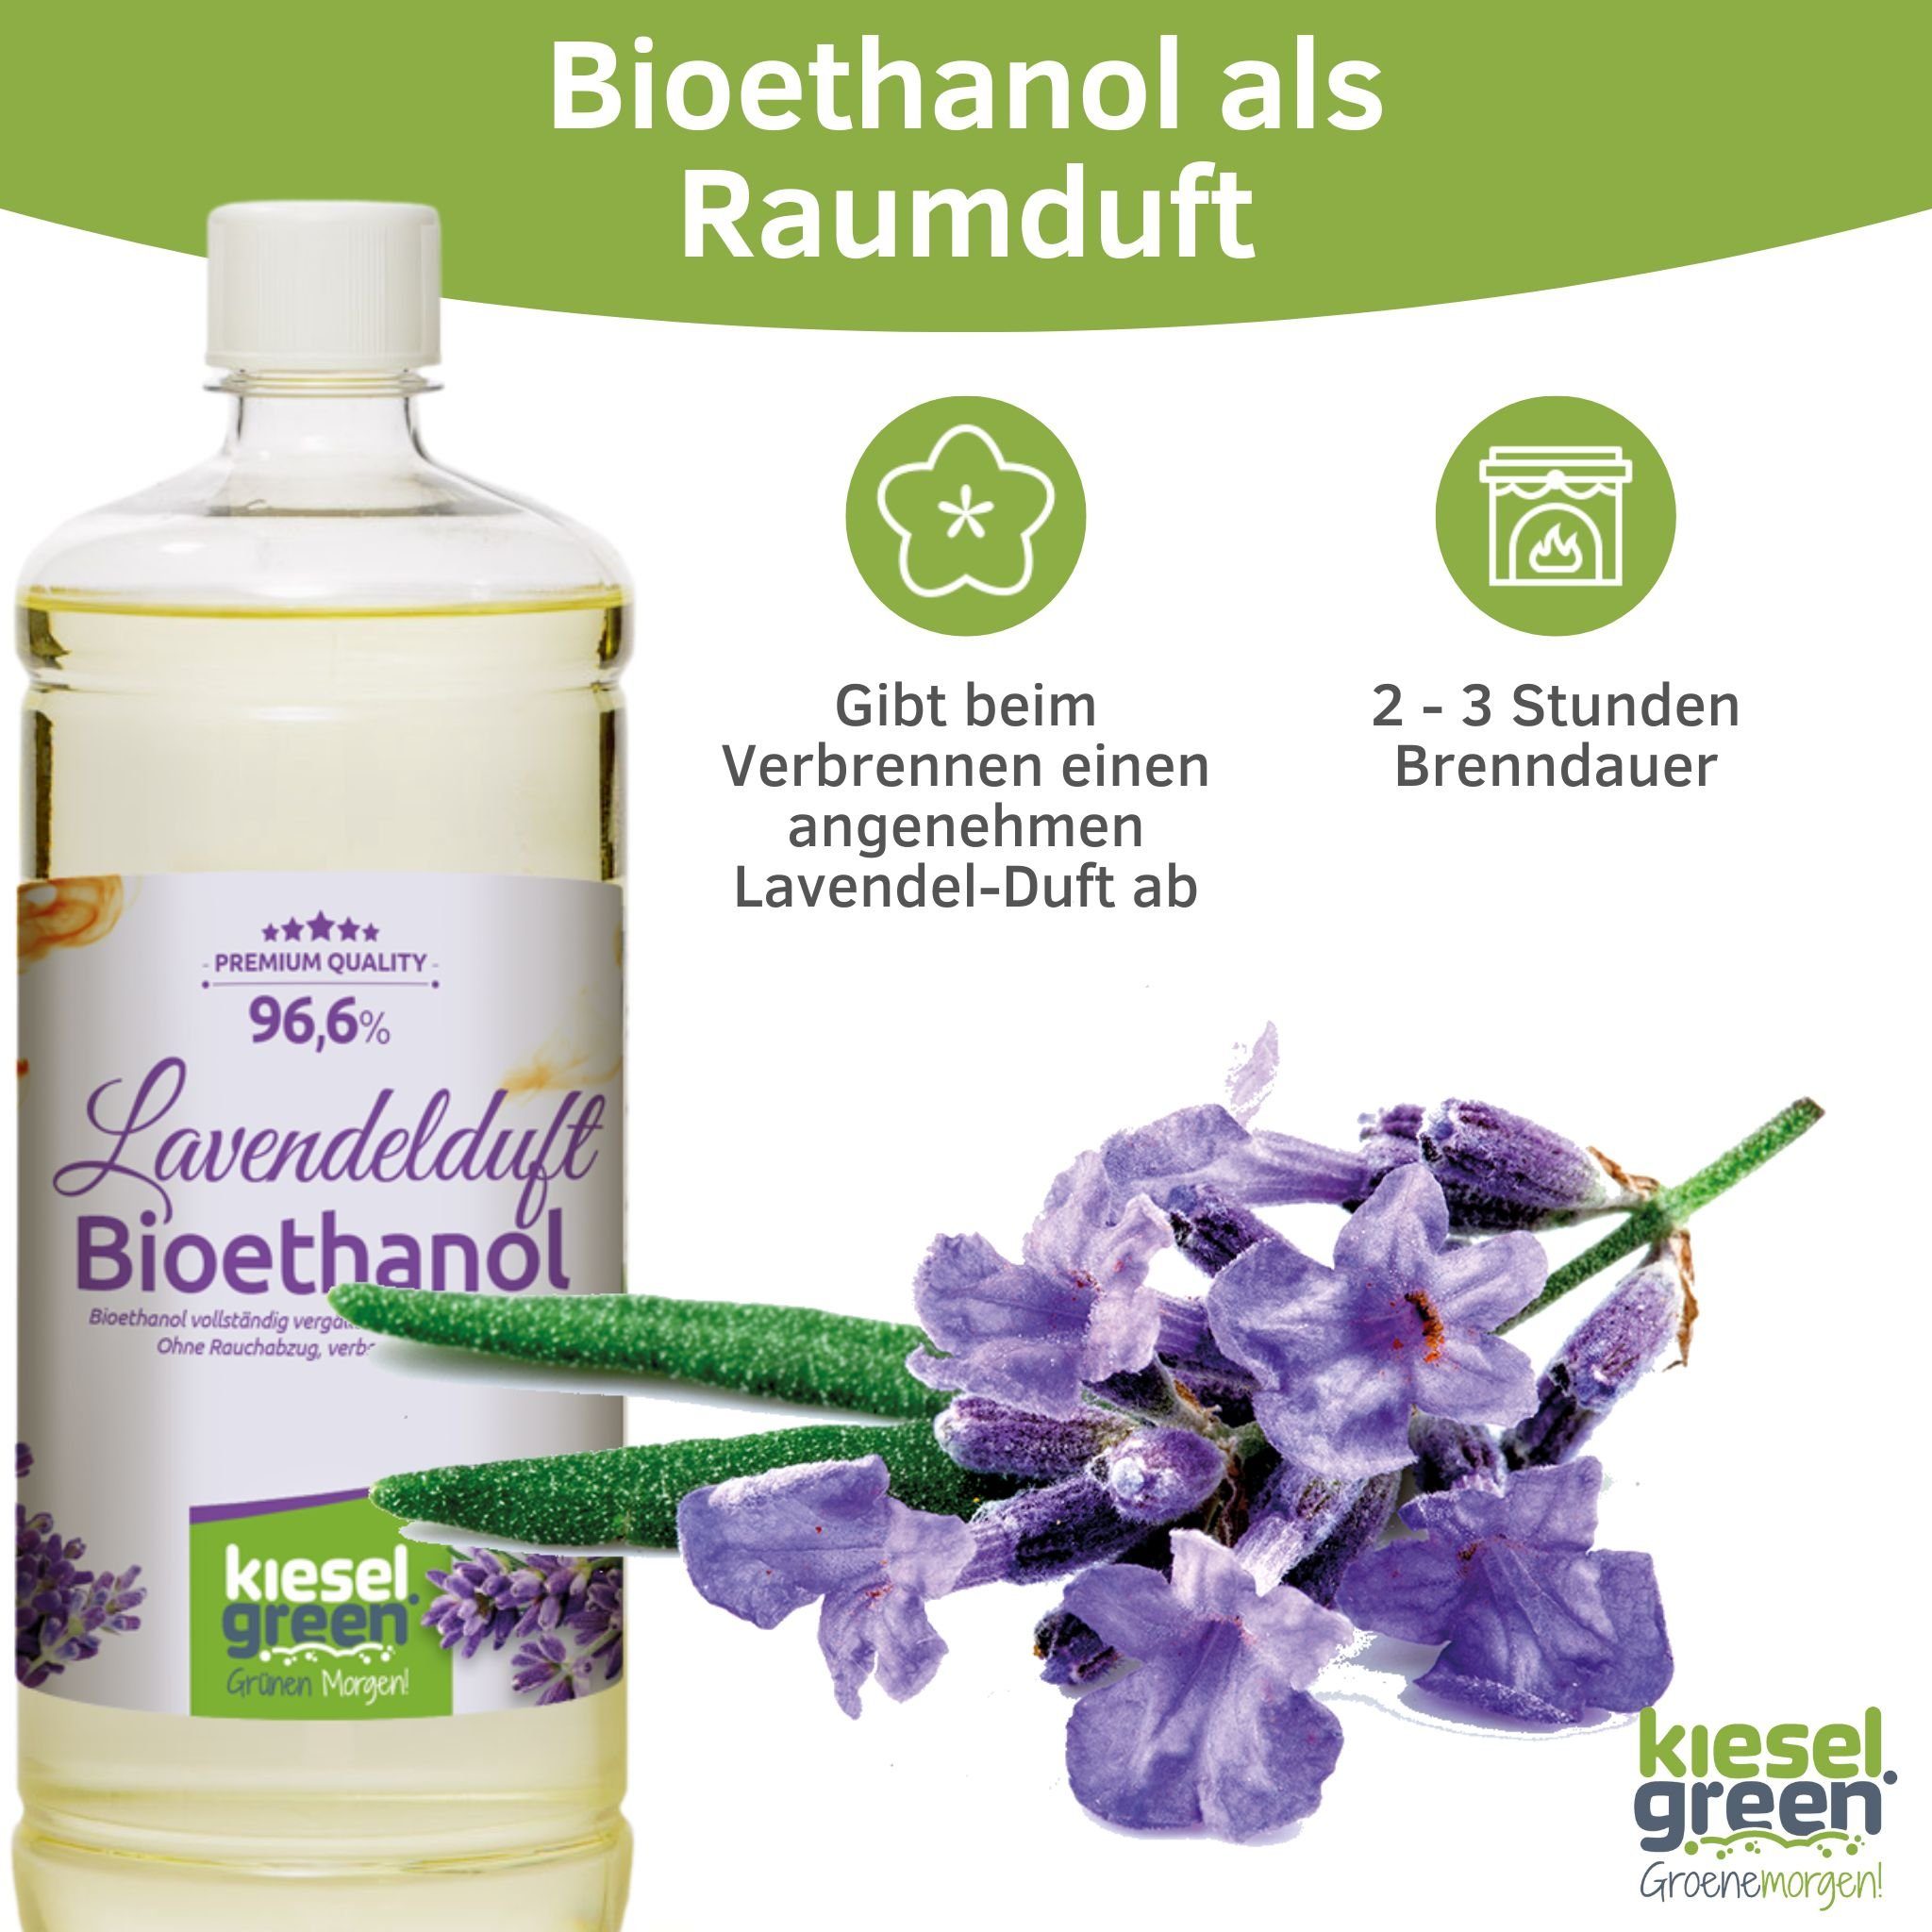 KieselGreen Flasche x KieselGreen 12 Bioethanol 6x + 6x 1 - + 6x Sets Liter 6x Bioethanol Lavendelduft Geruchlos